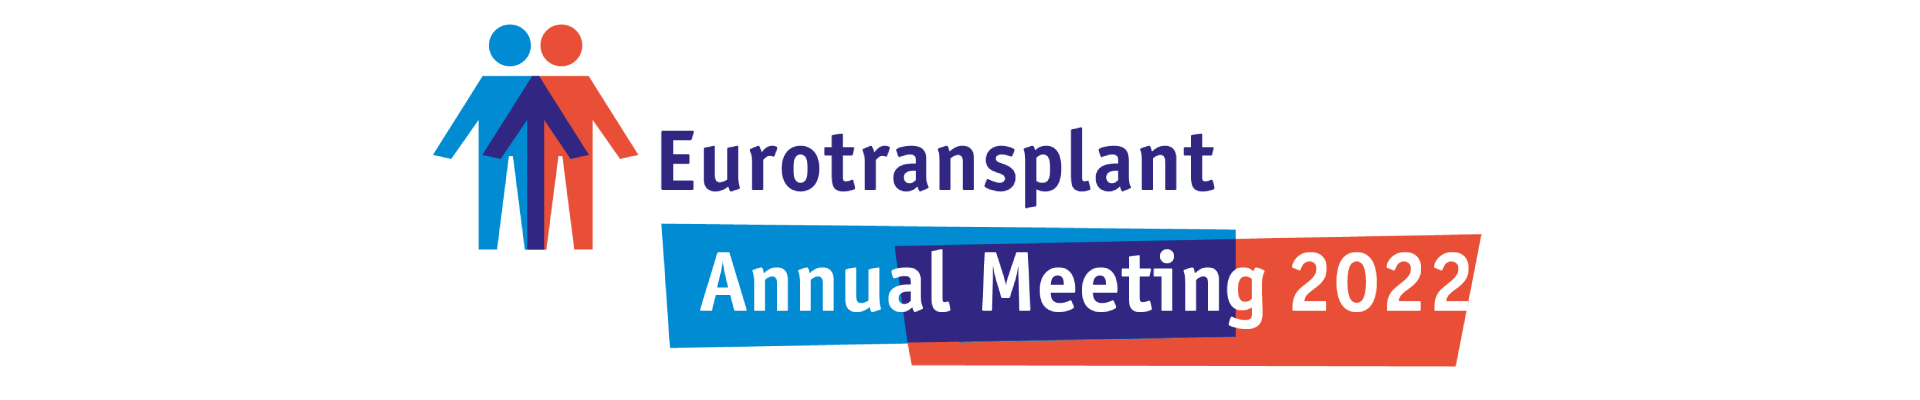 Eurotransplant Annual Meeting 2022 | Sponsors